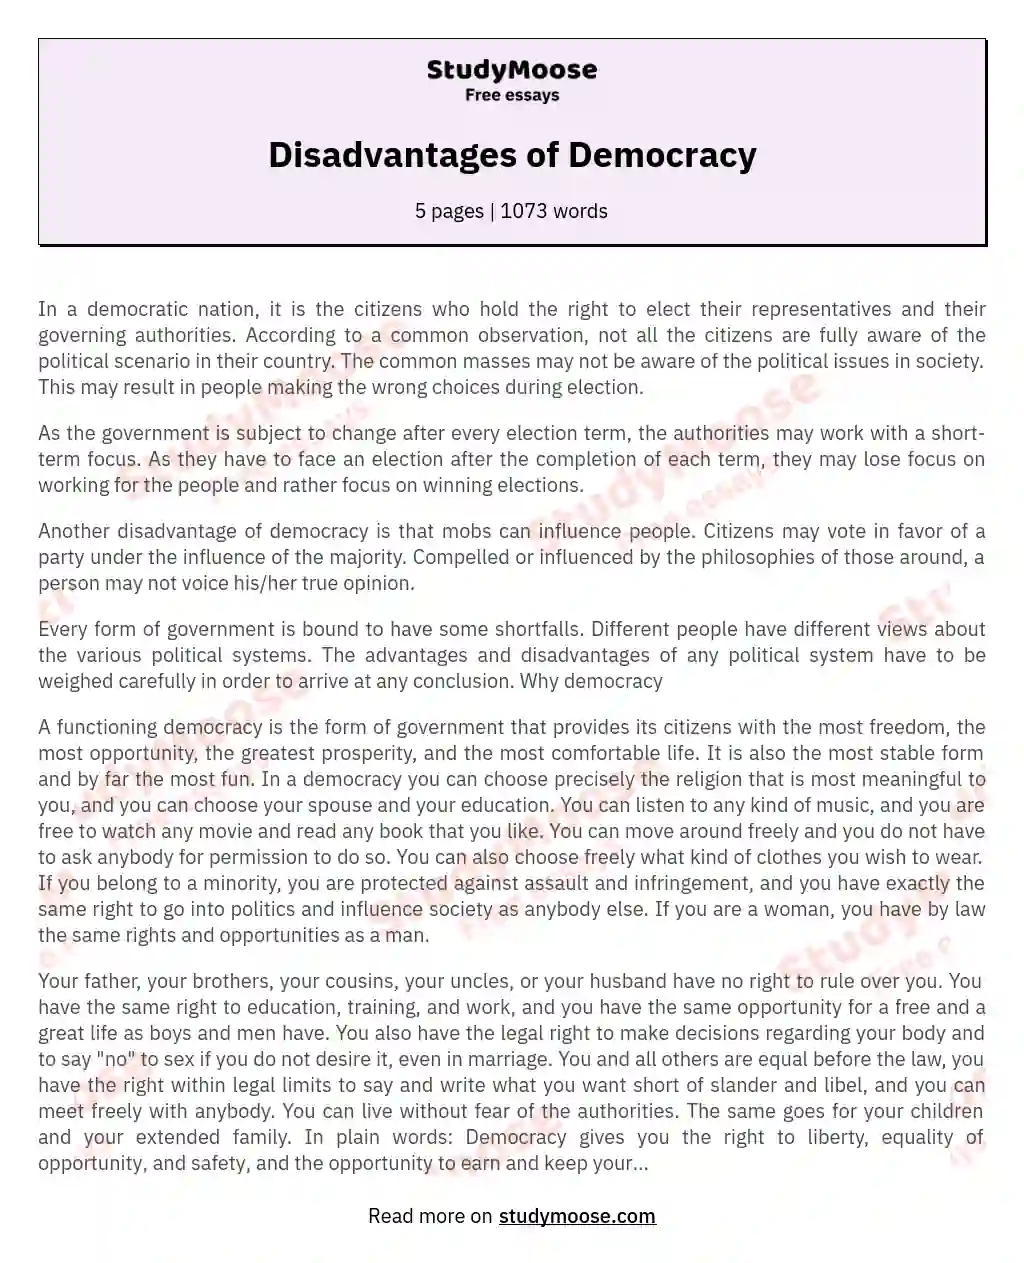 Disadvantages of Democracy essay